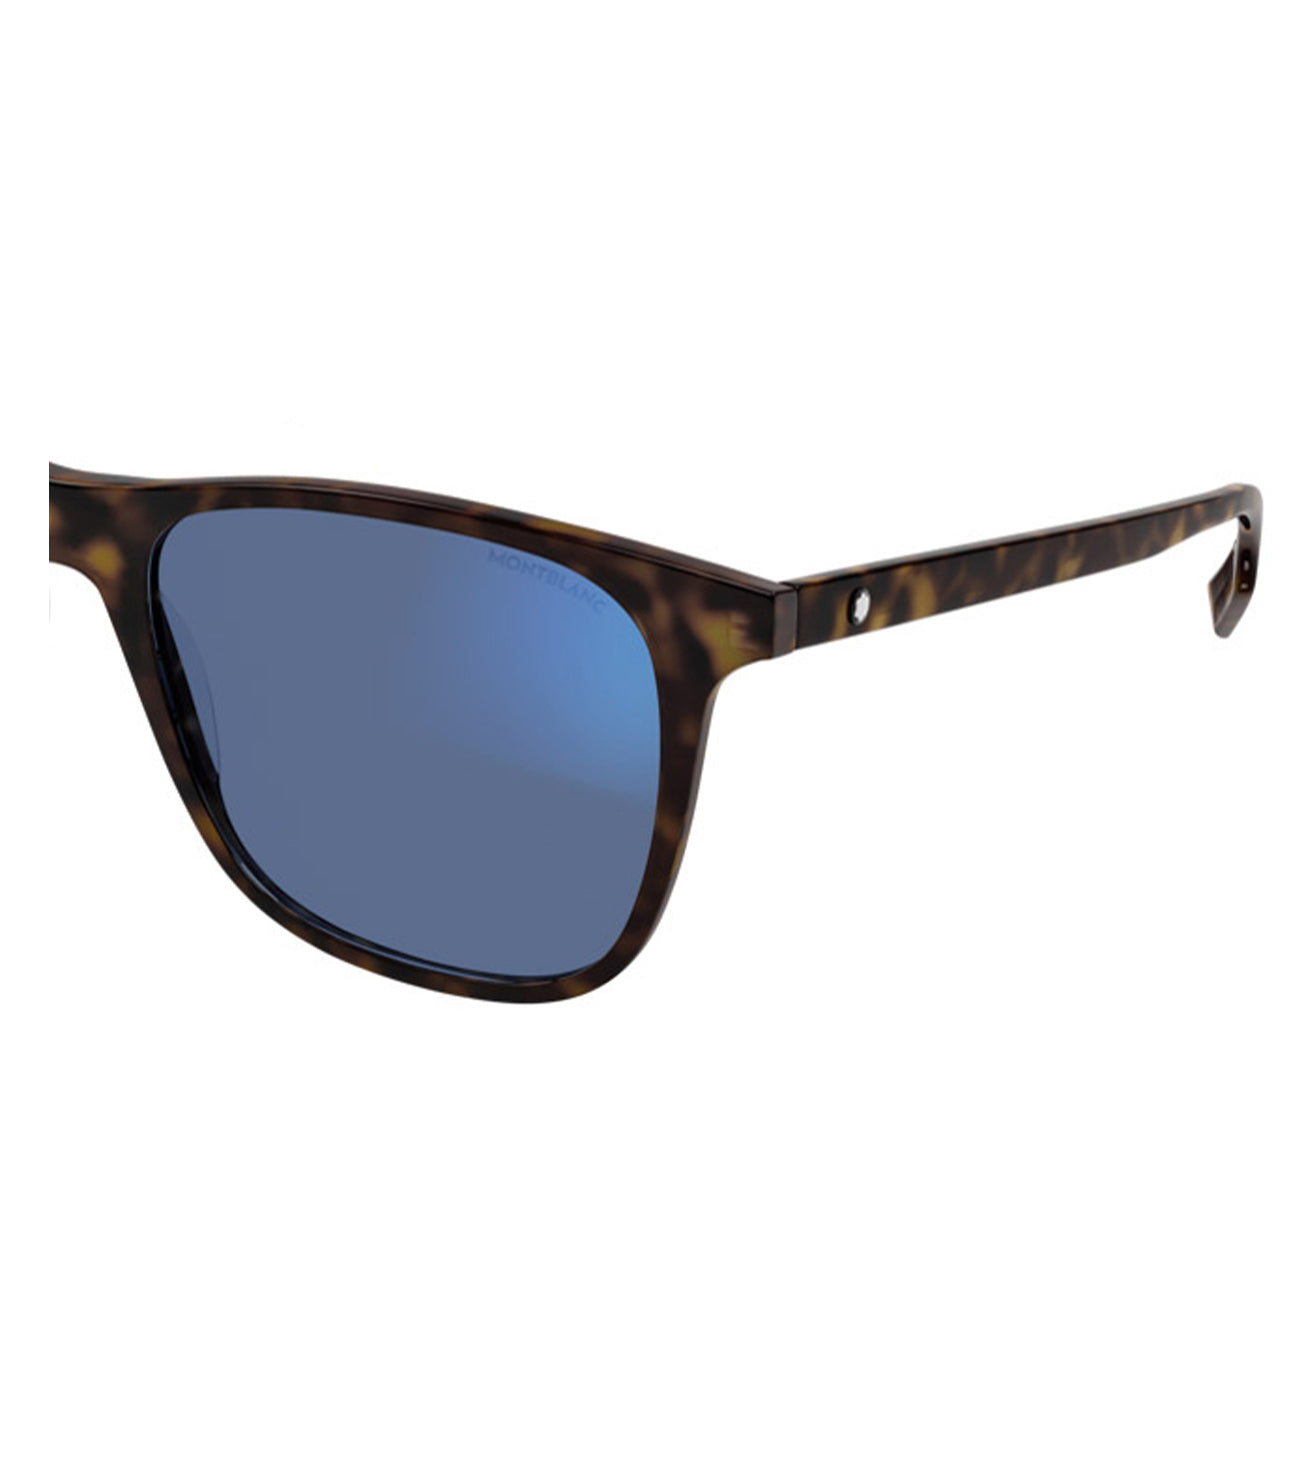 Montblanc Men's Light Blue Wayfarer Sunglasses